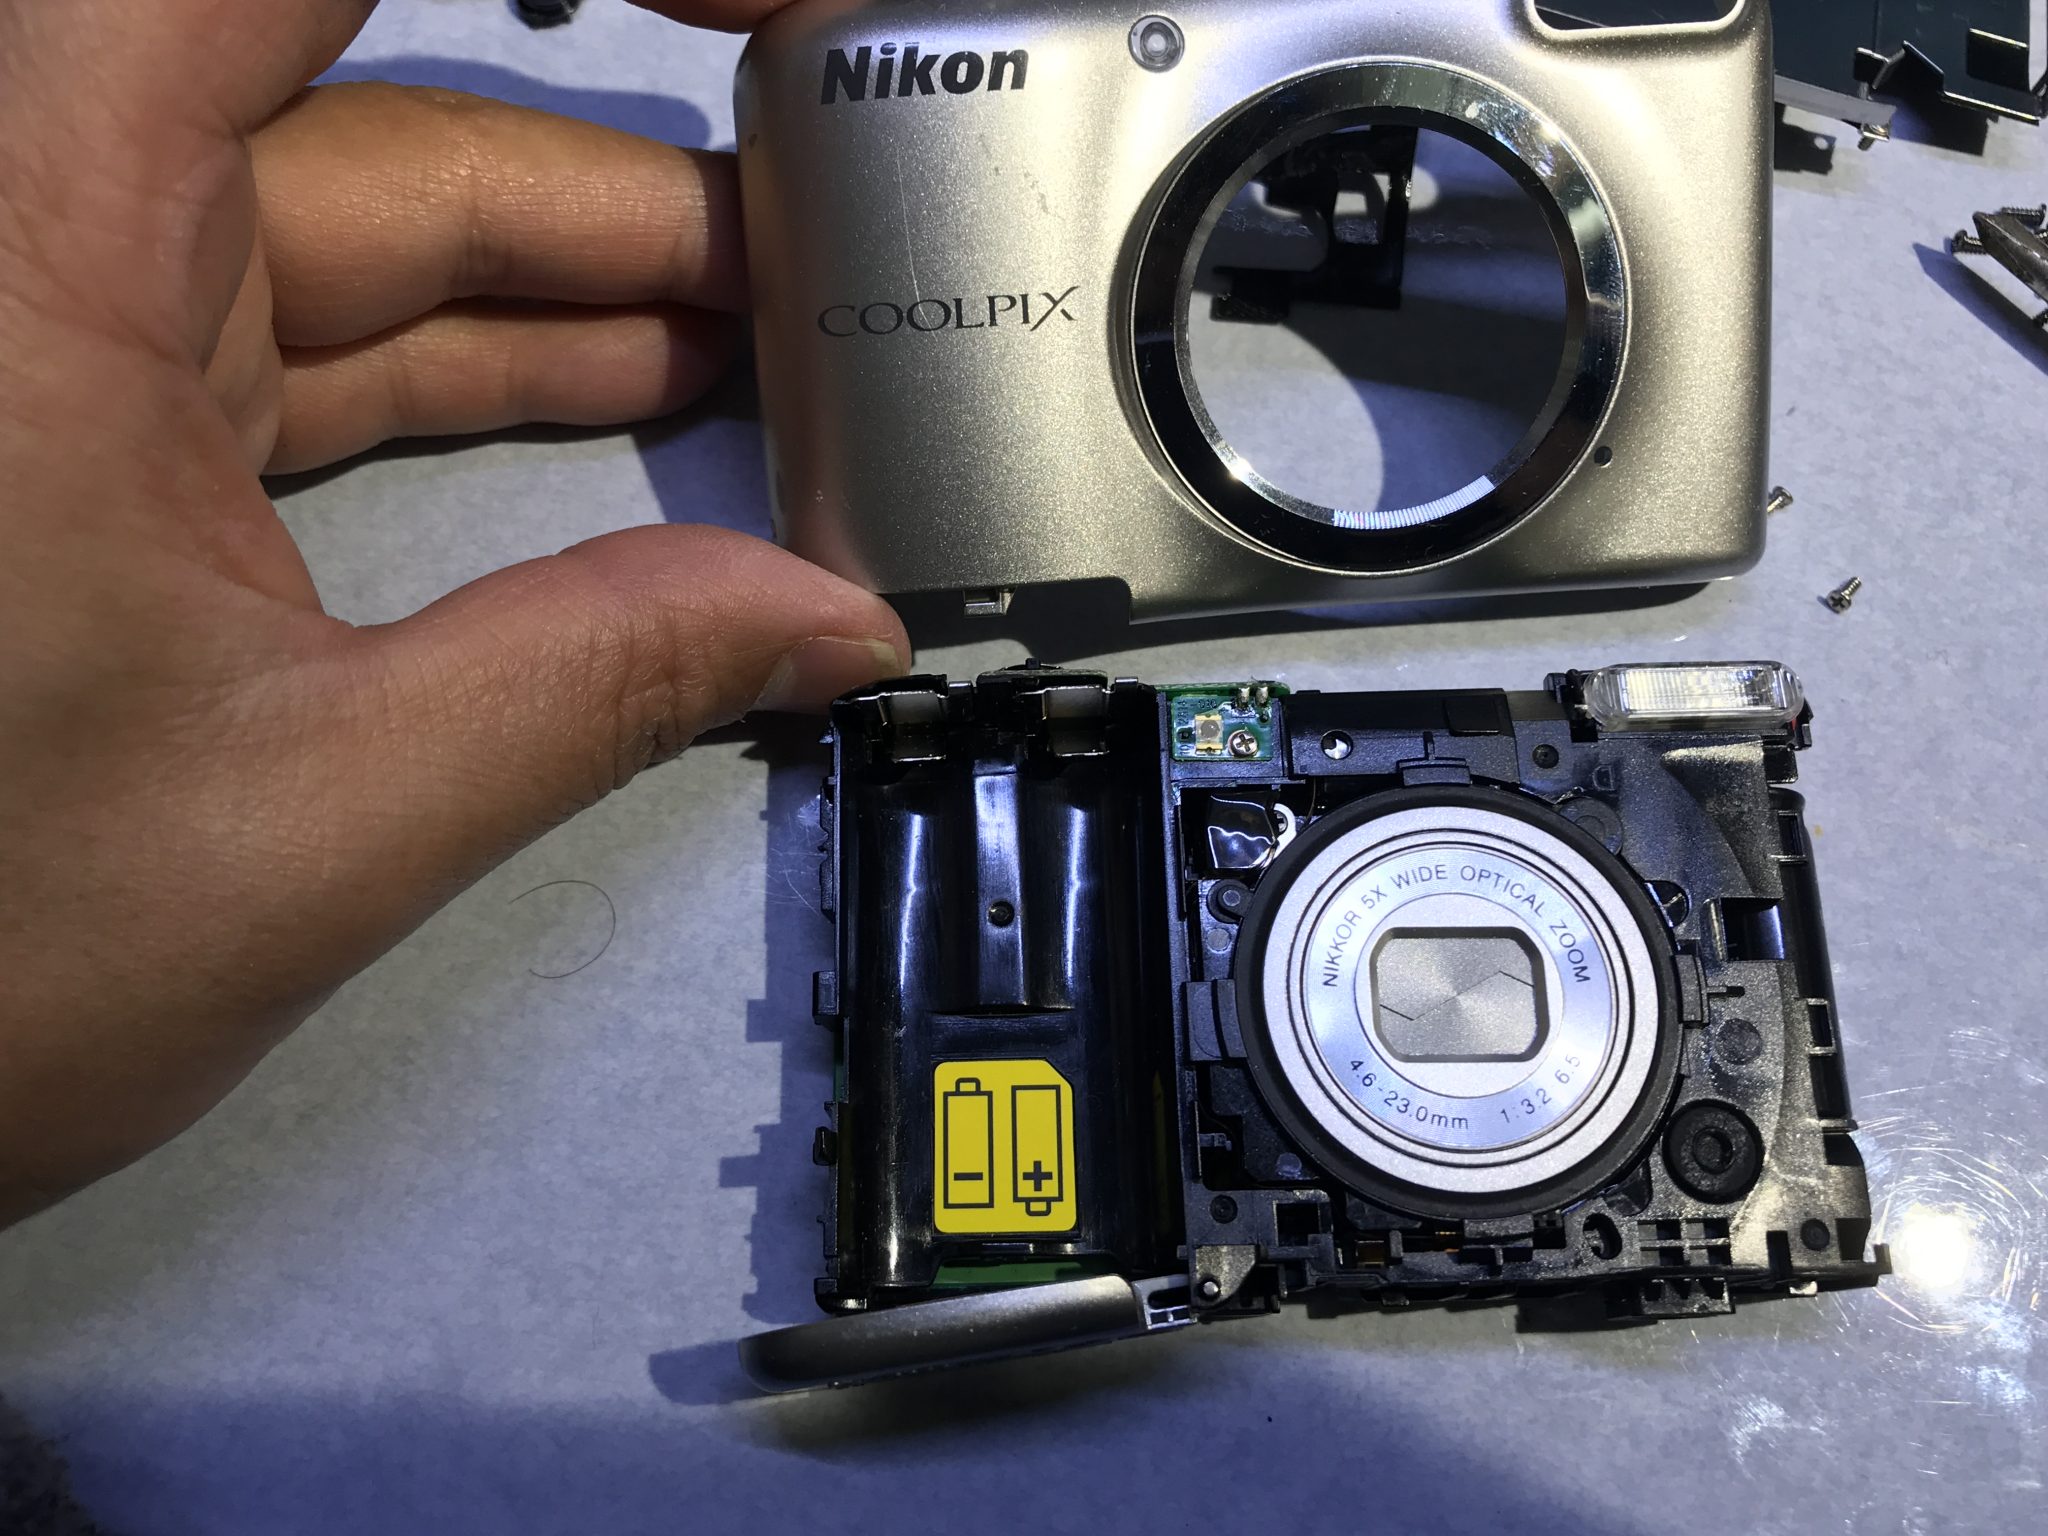 Nikonデジカメ COOLPIX A10分解 | にしきの理科準備室